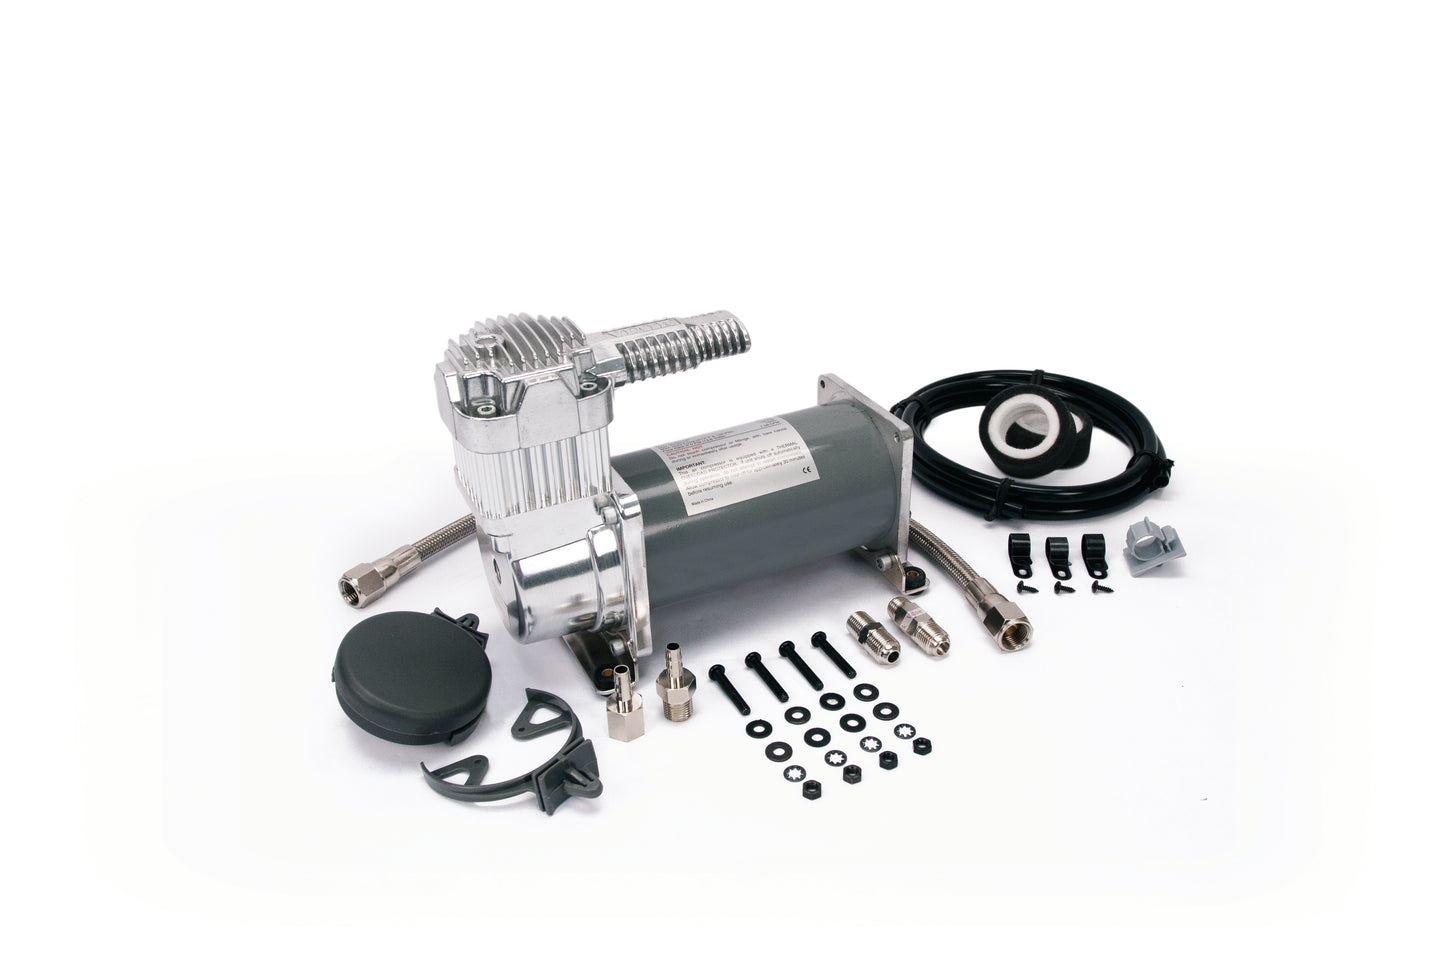 VIAIR 330C IG Series Compressor Kit (12V, Intercooler Head, 100% Duty, Sealed IP67) CE, RoHS